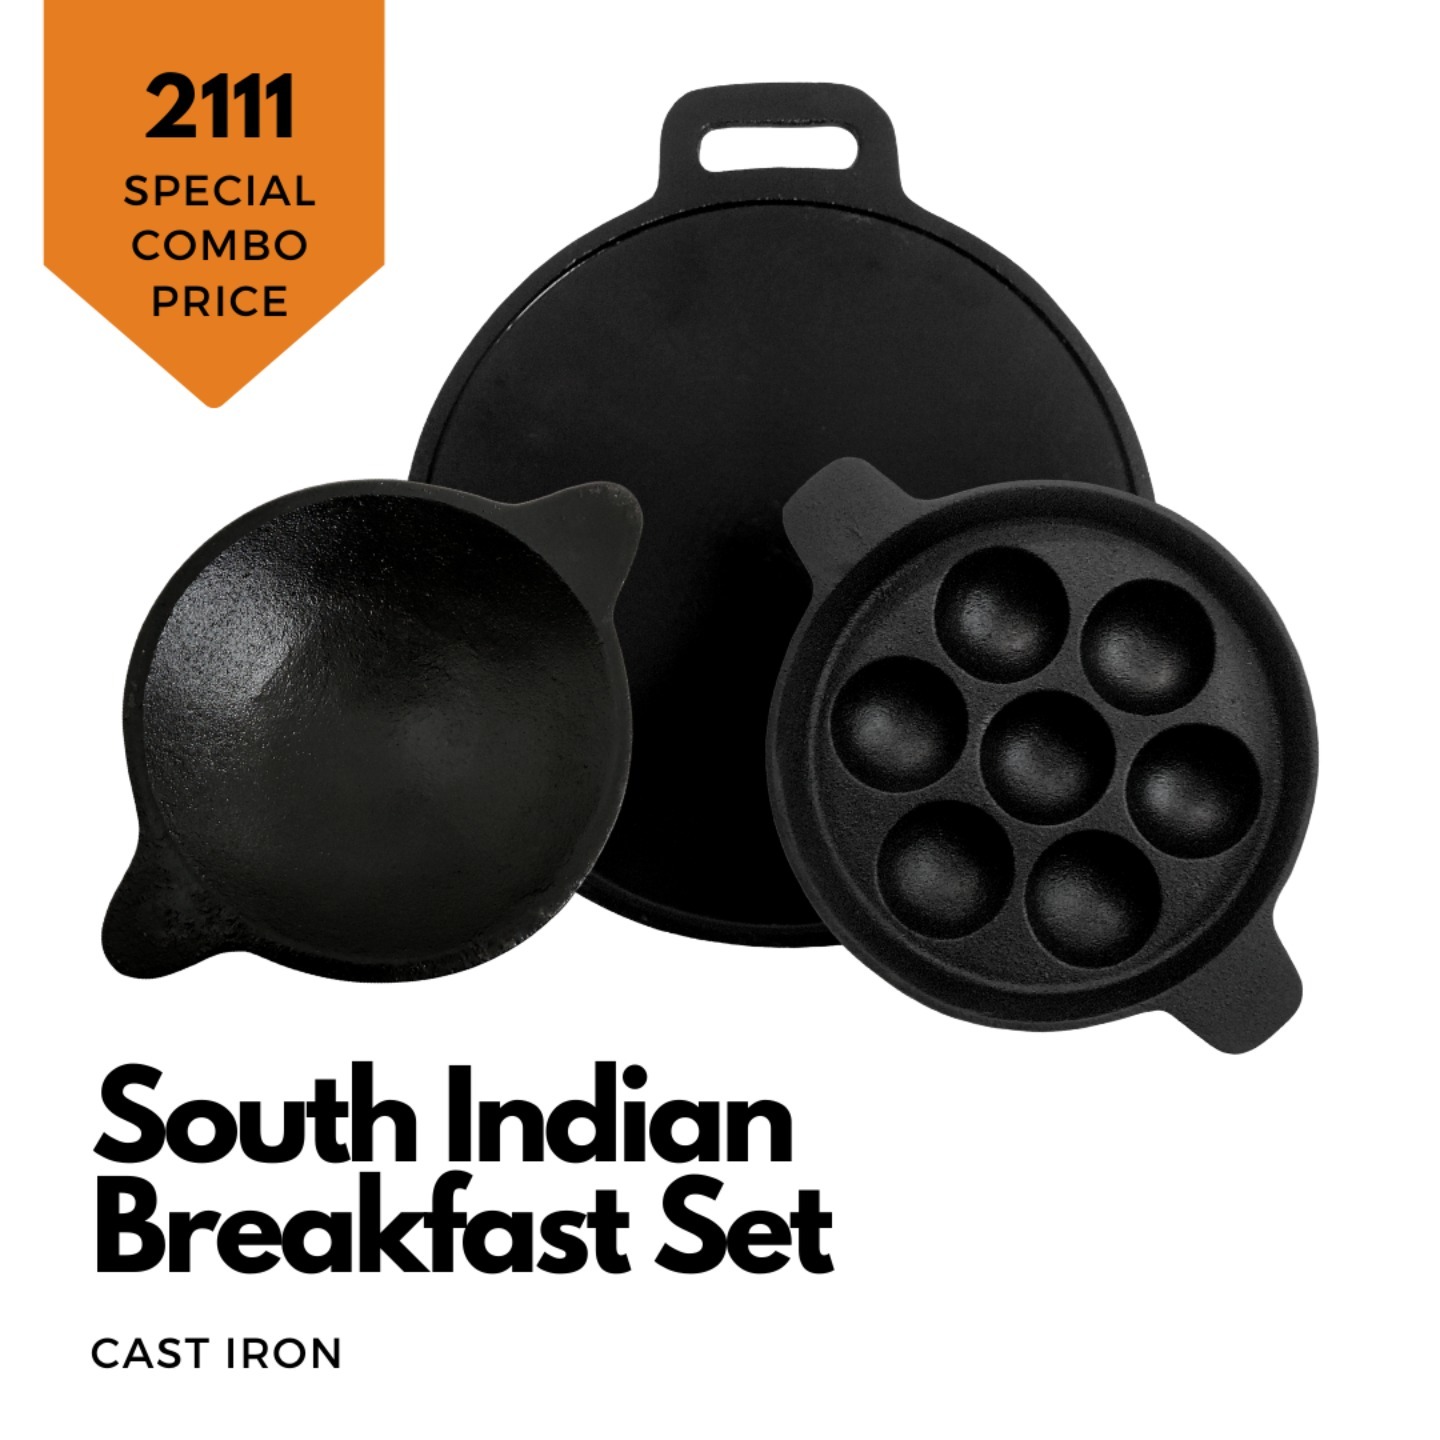 South Indian Breakfast Set